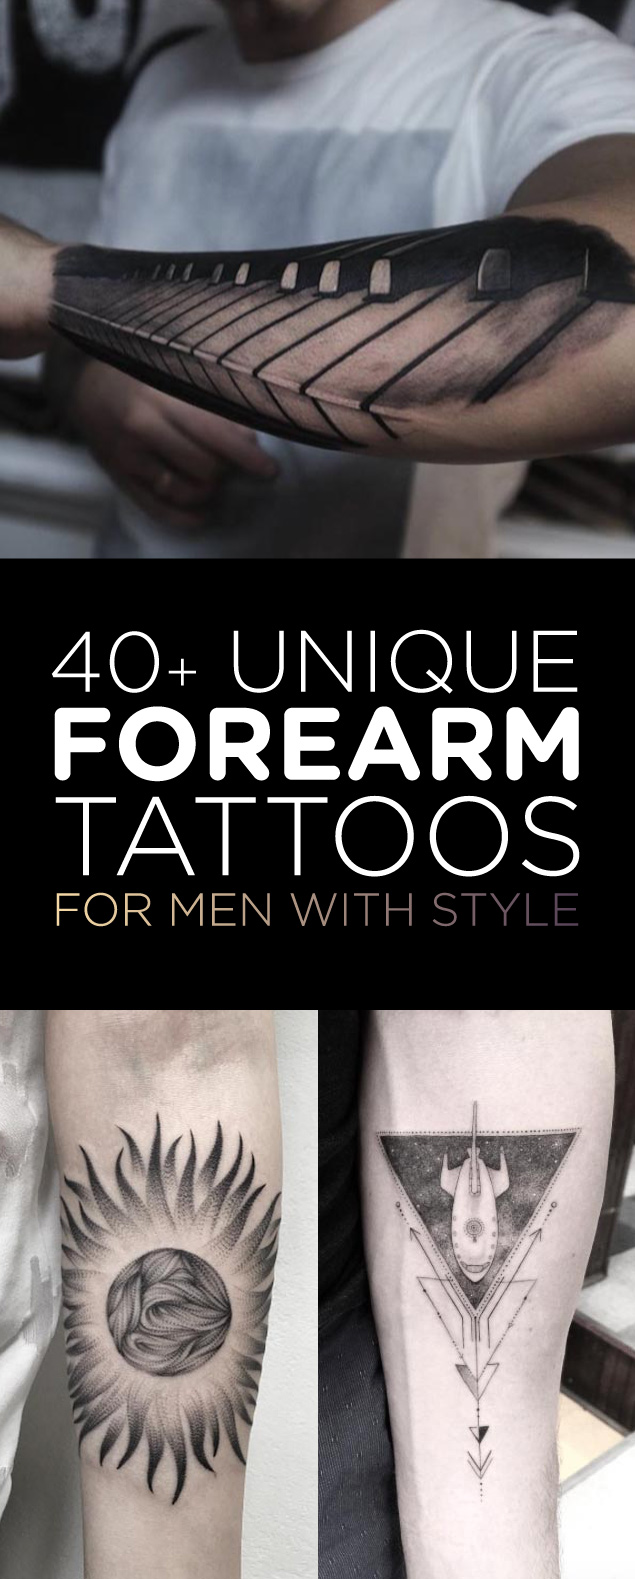 TattooBlend | Forearm Tattoos for Men